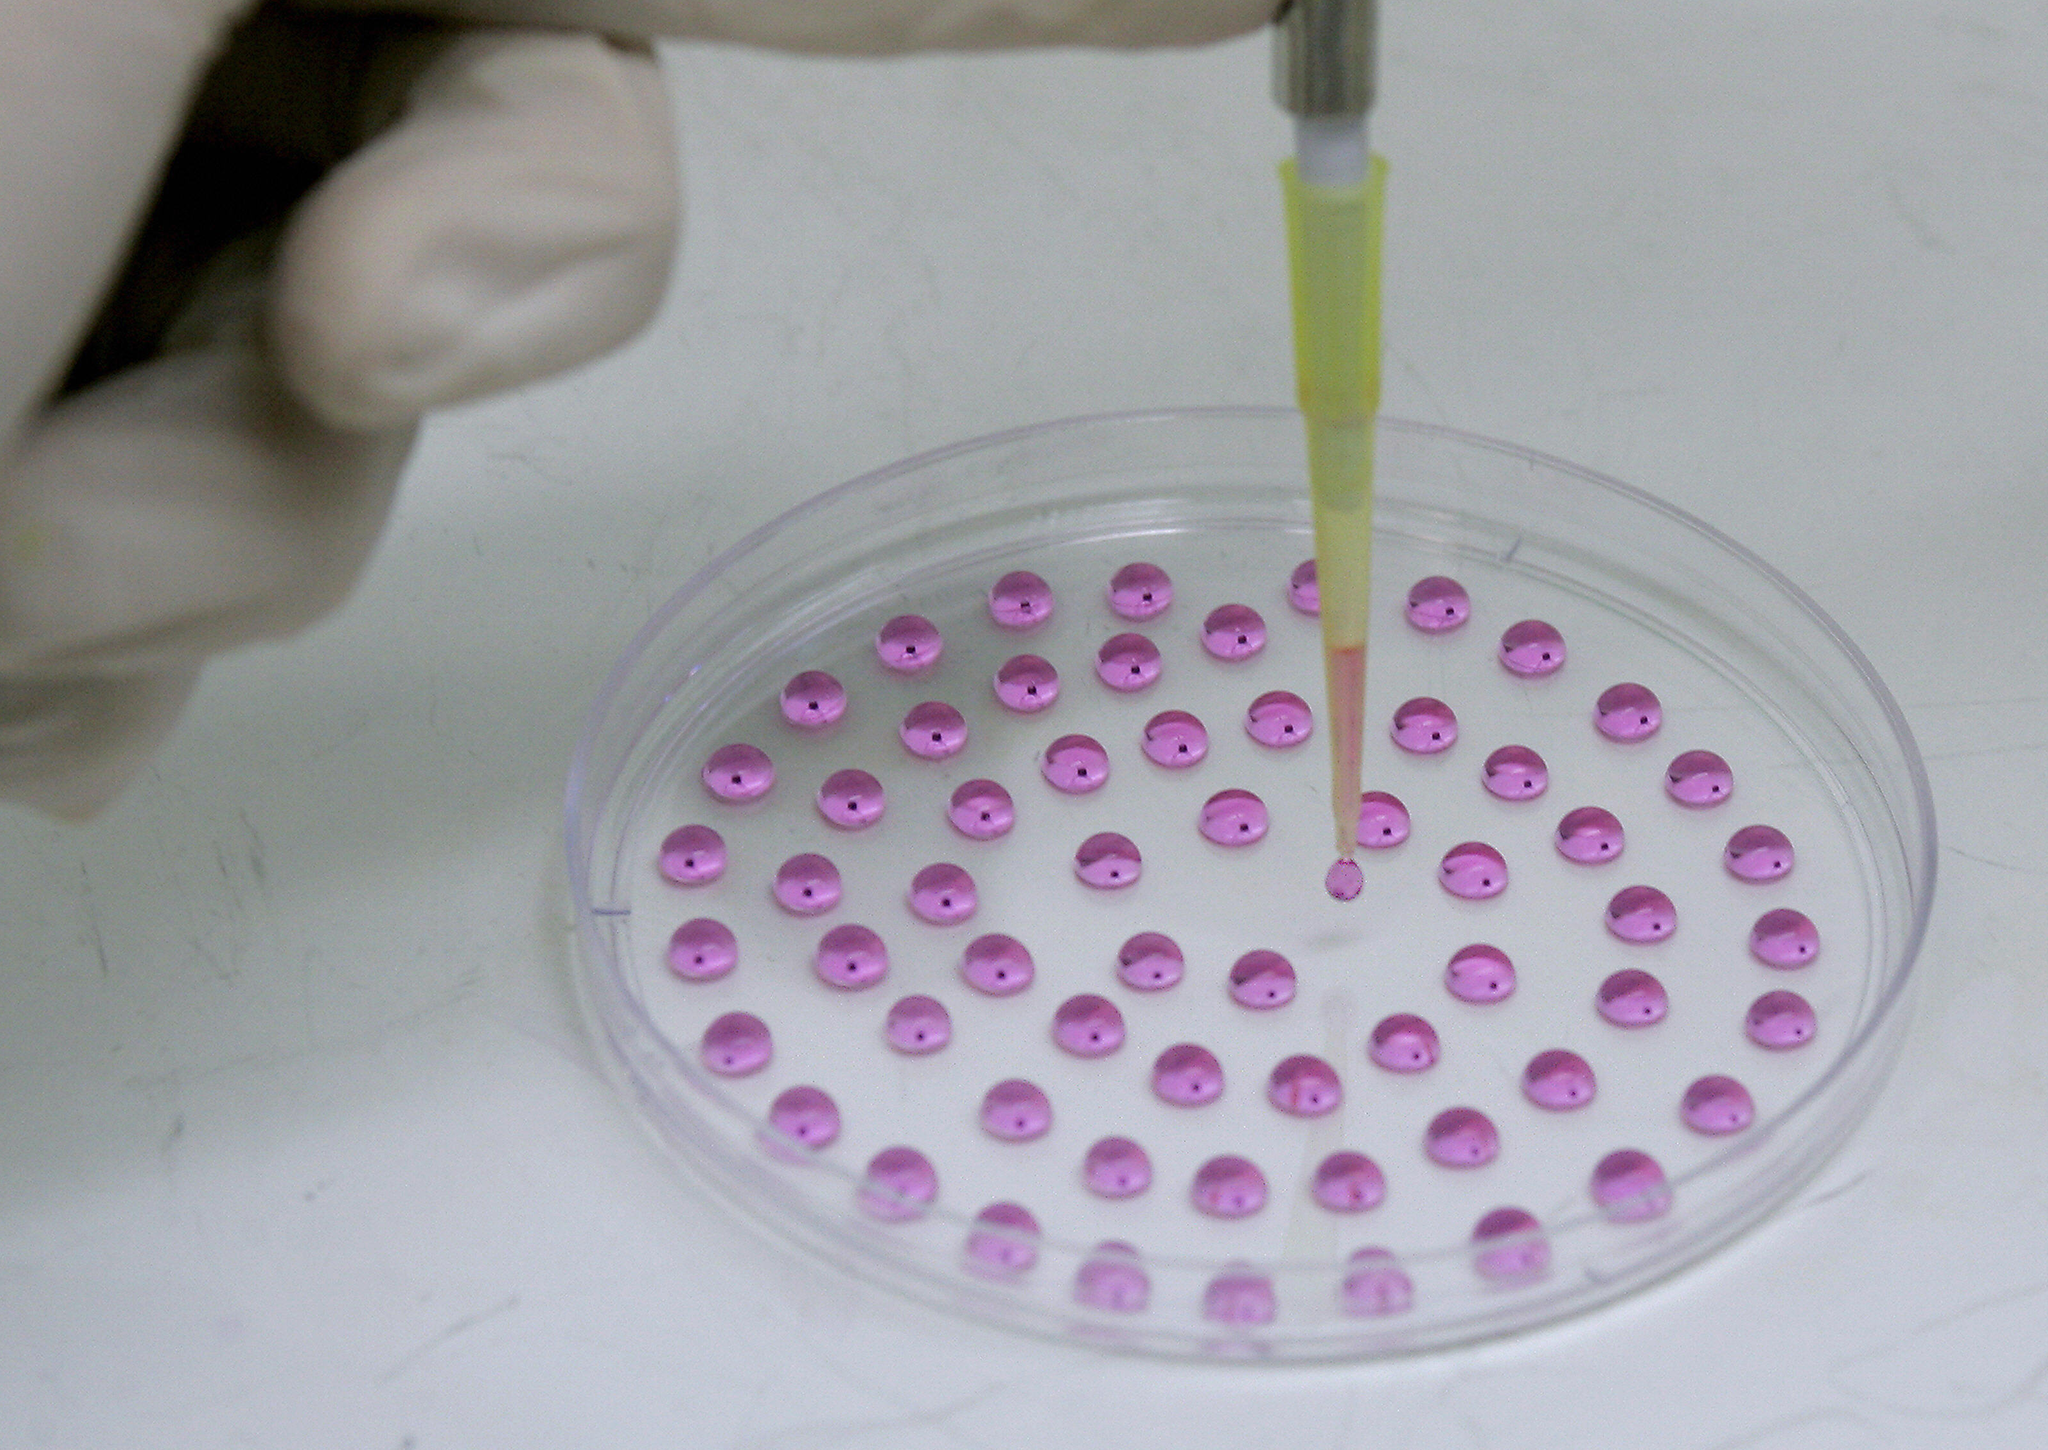 A scientific researcher manipulates drops of stem cells in a laboratory